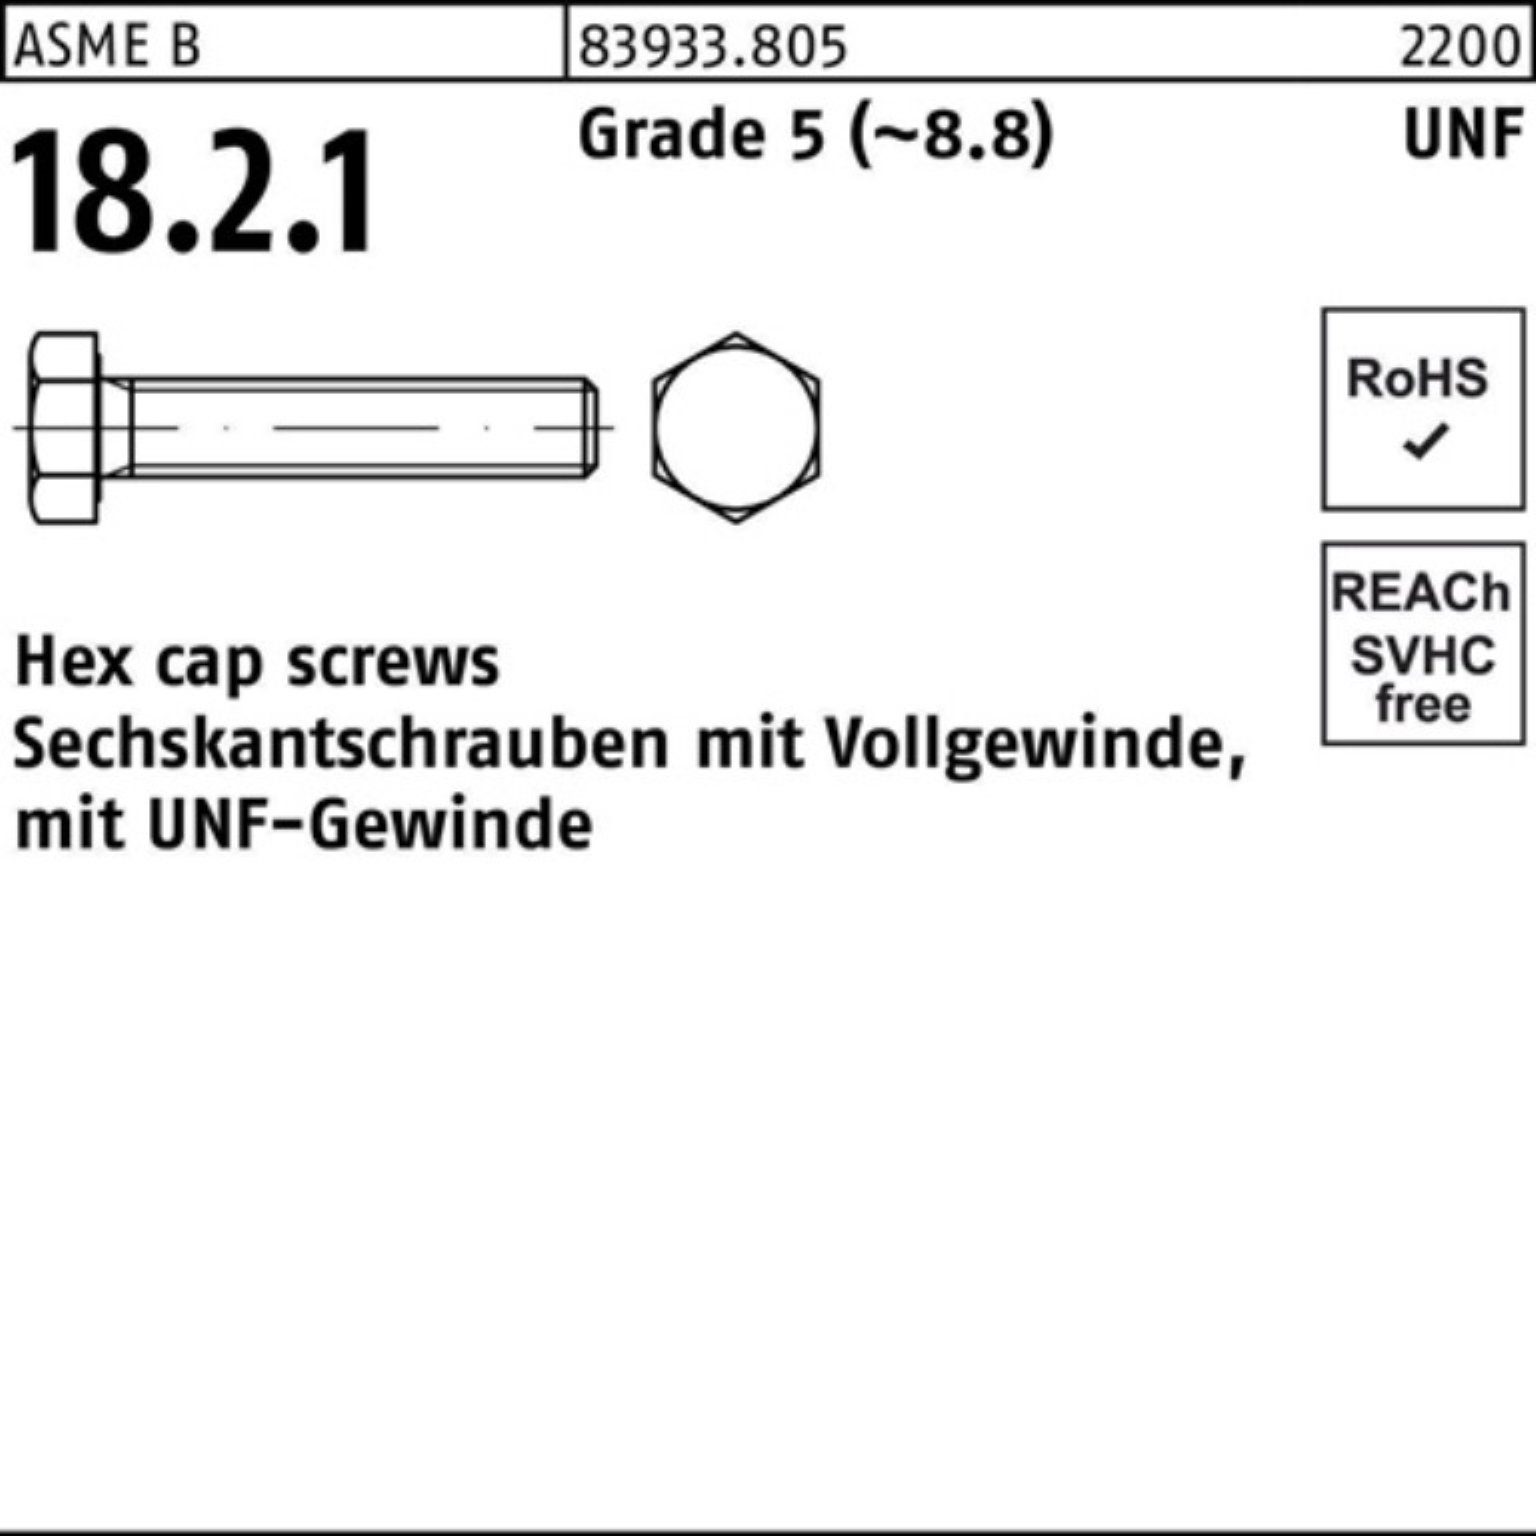 Reyher Sechskantschraube 100er Pack Sechskantschraube R 83933 UNF-Gewinde VG 3/8x 3/4 Grade 5